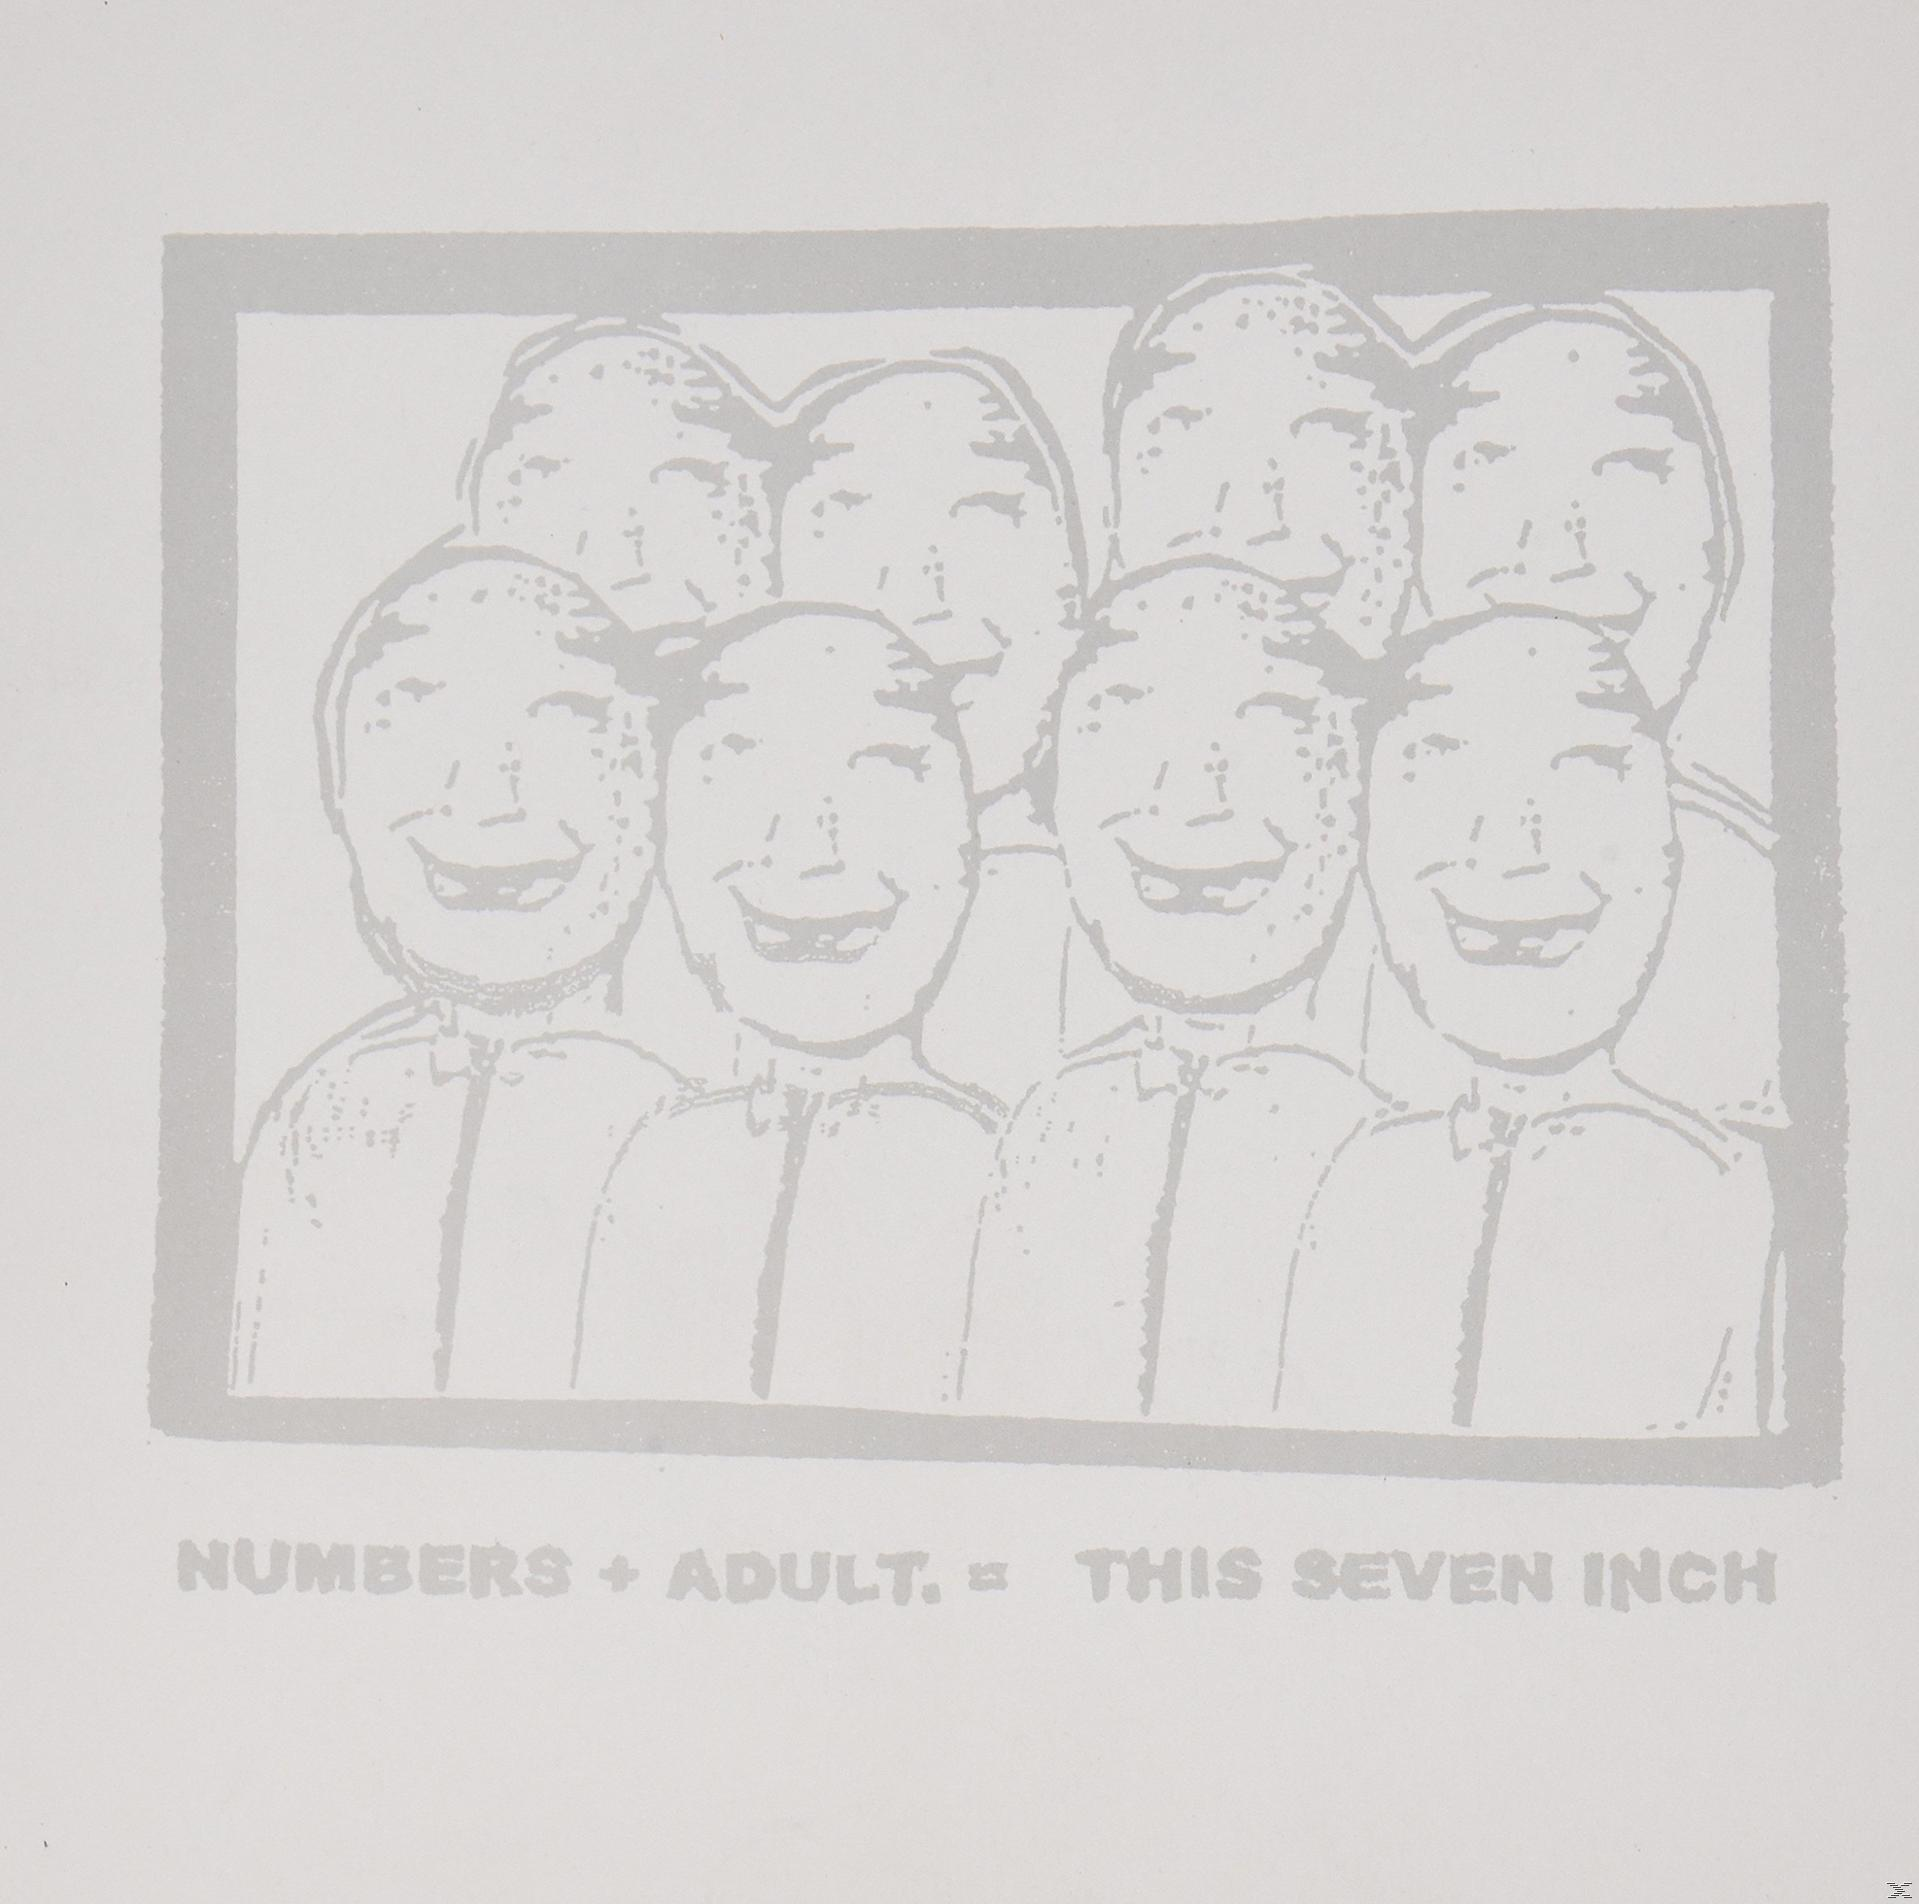 - Numbers, Adult Seven Inch (Split) This (Vinyl) -